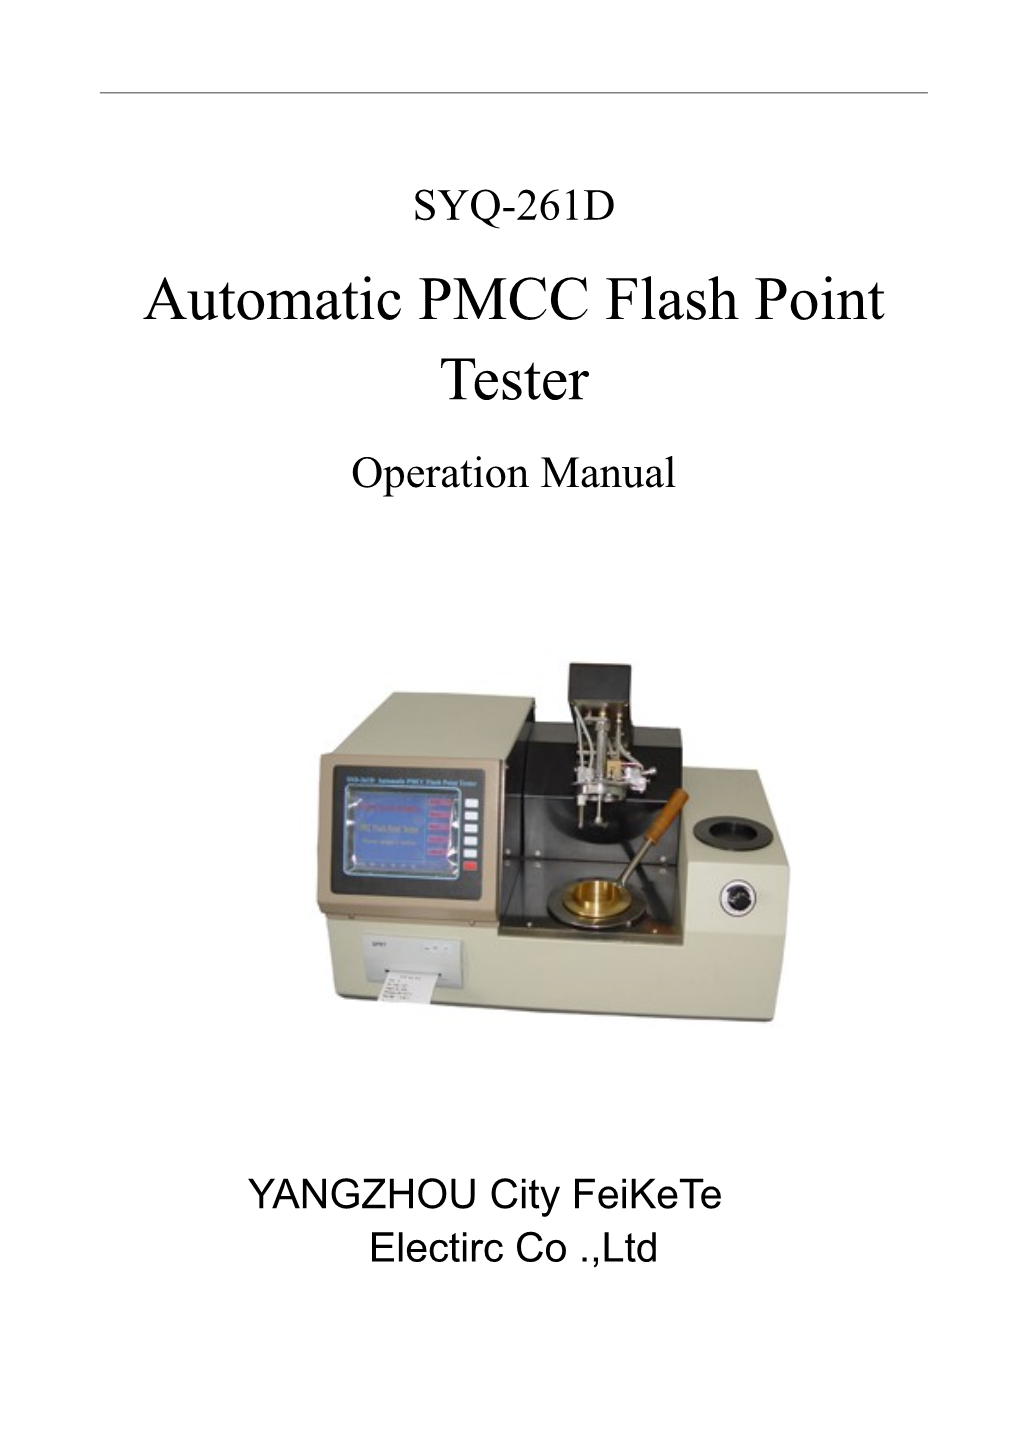 Shanghai FEIKETE SYQ-261D Automatic PMCC Flash Point Tester